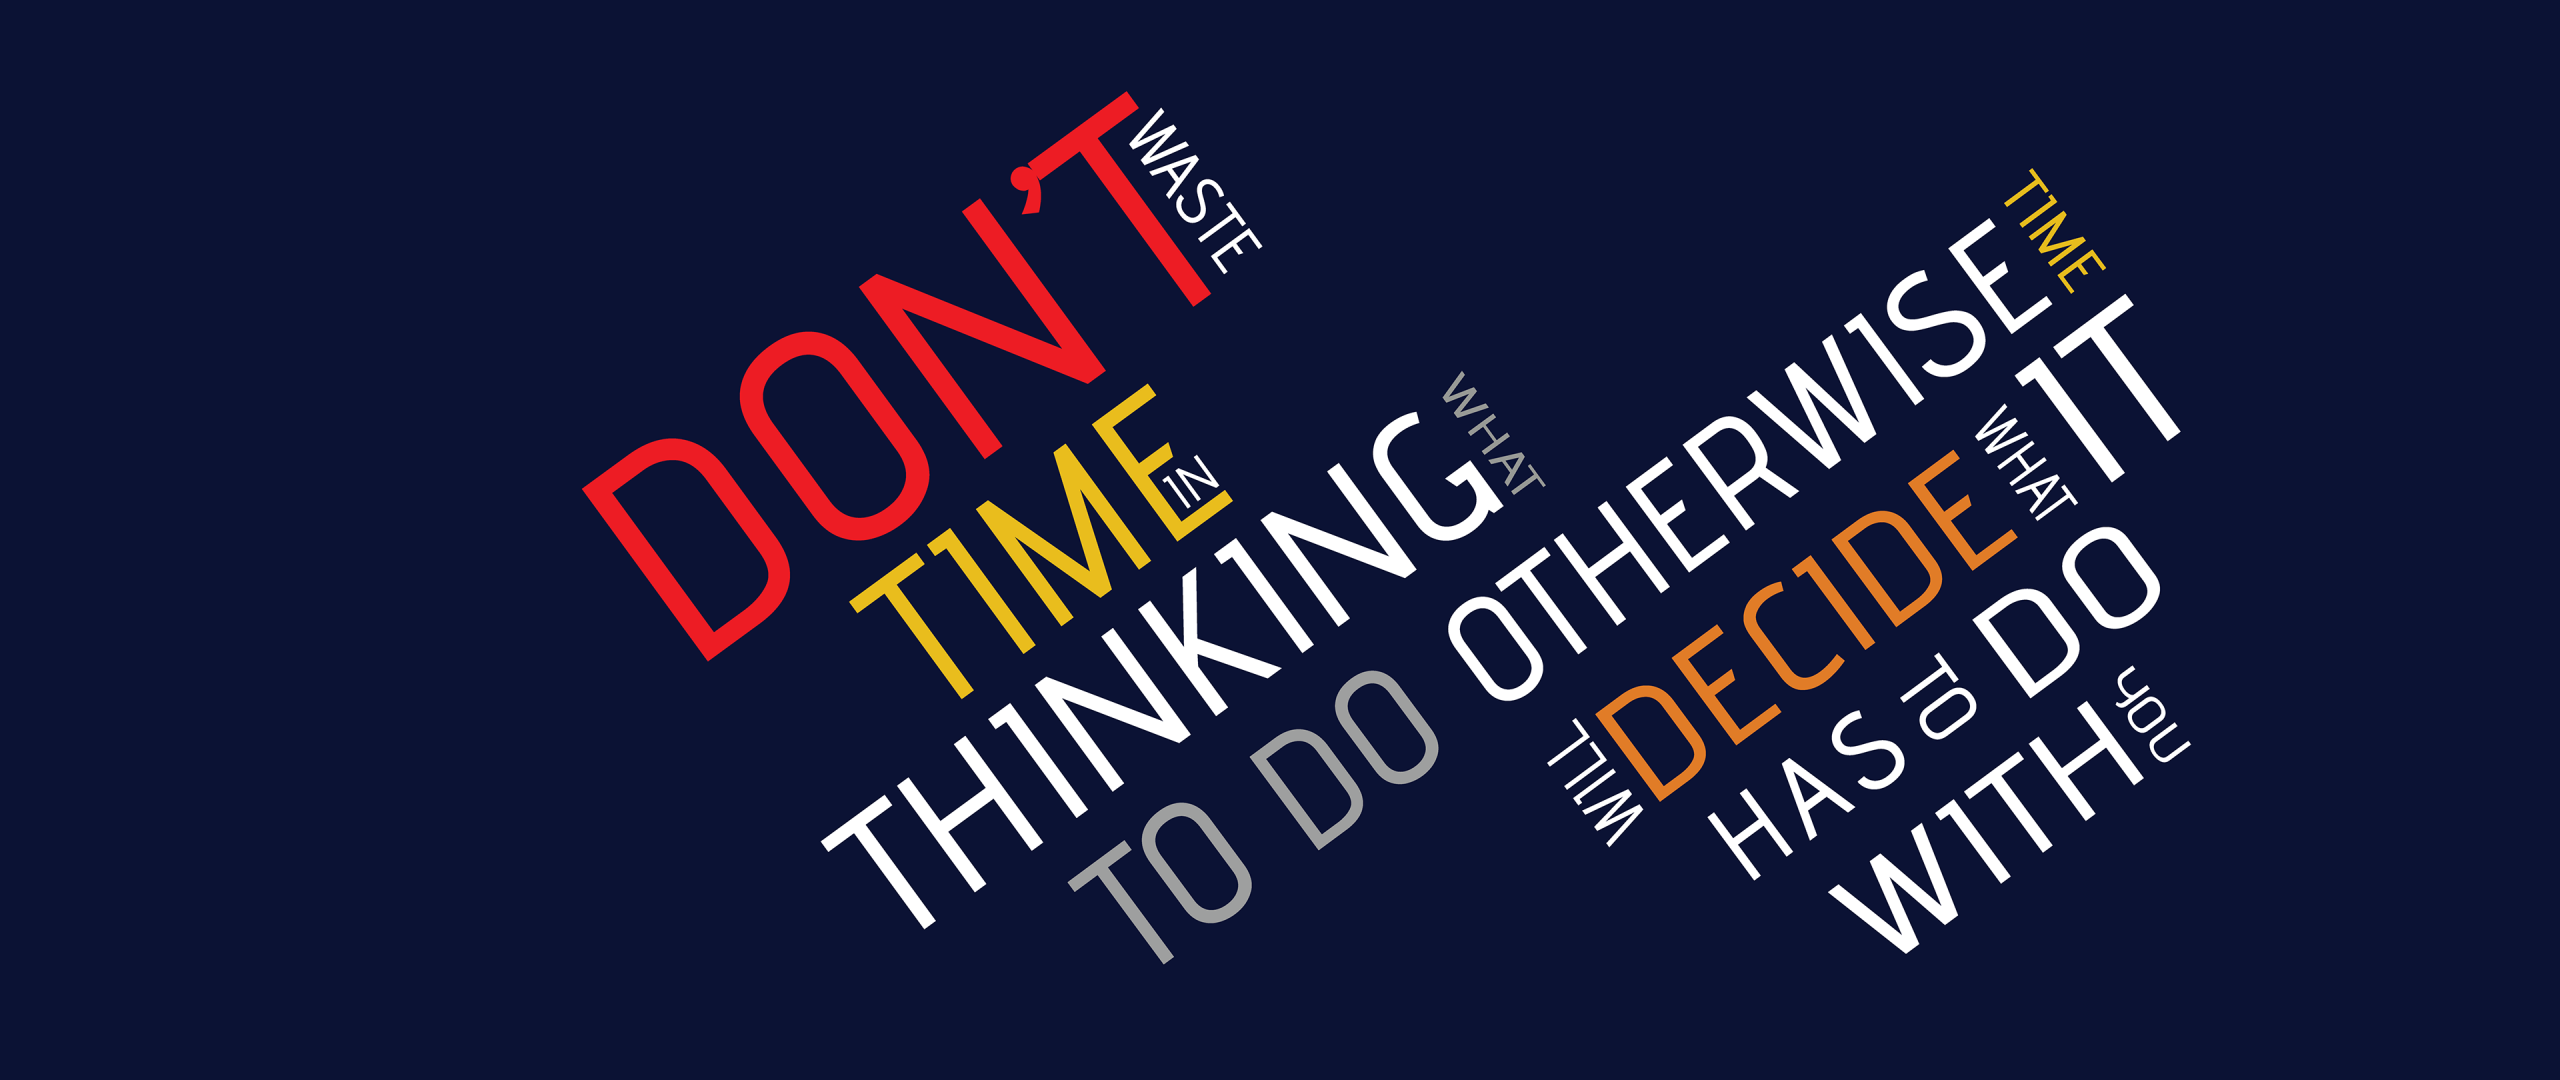 Motivational Inspirational Quotes Desktop Wallpaper Quotes  फट शयर